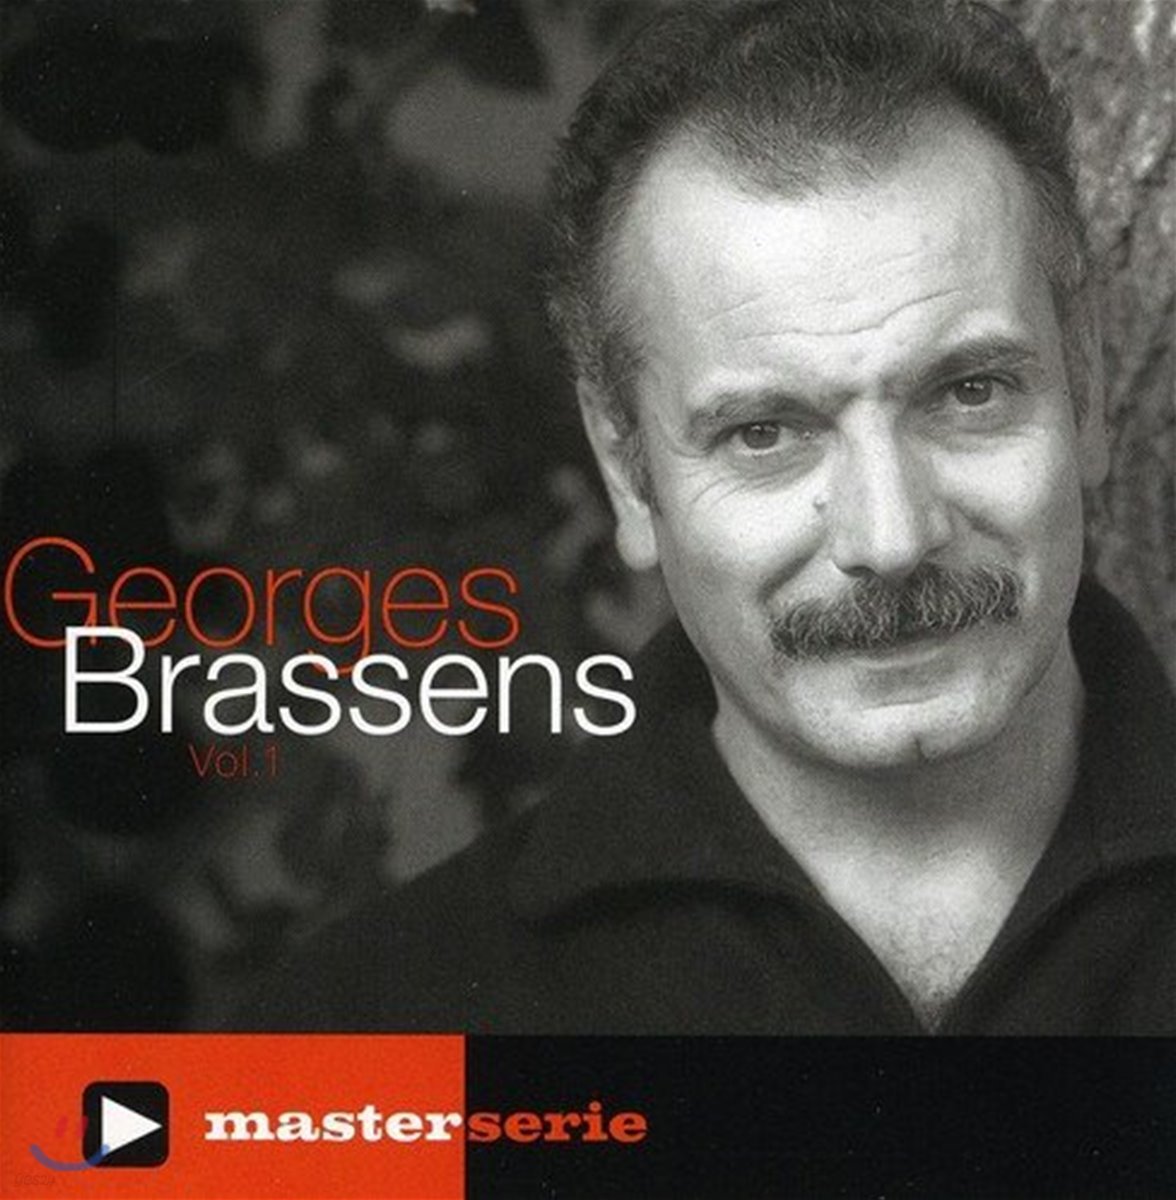 Georges Brassens (조르주 브라상) - Master Serie Vol.1